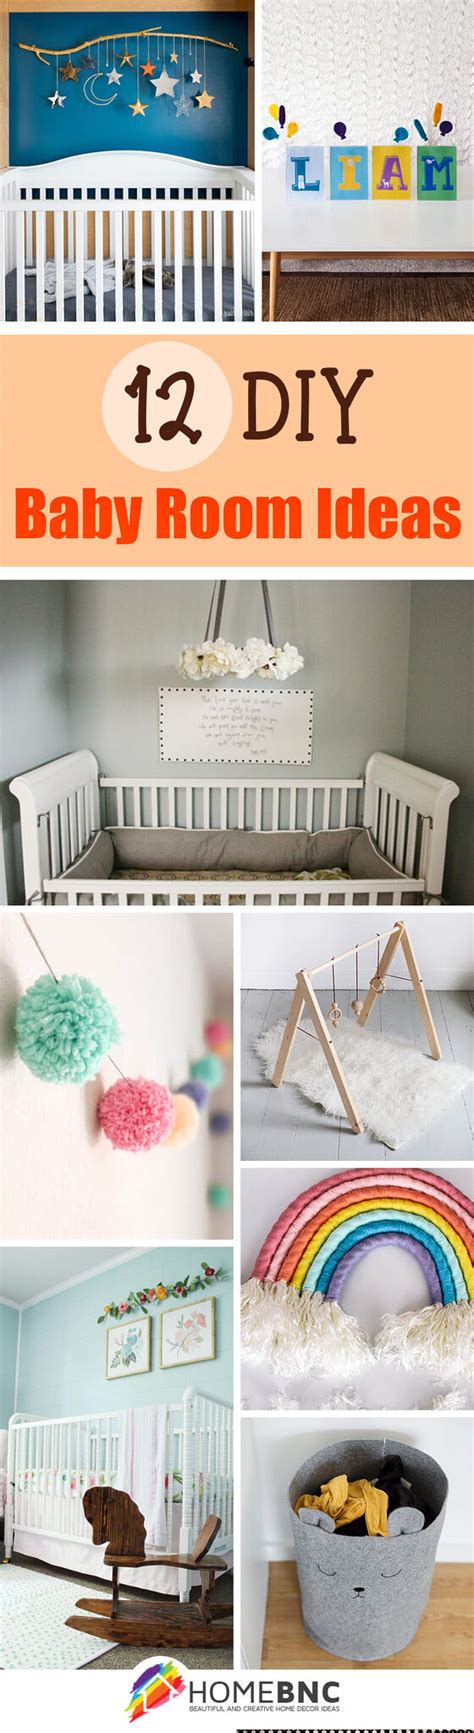 diy baby room decor ideas   dreamy nursery